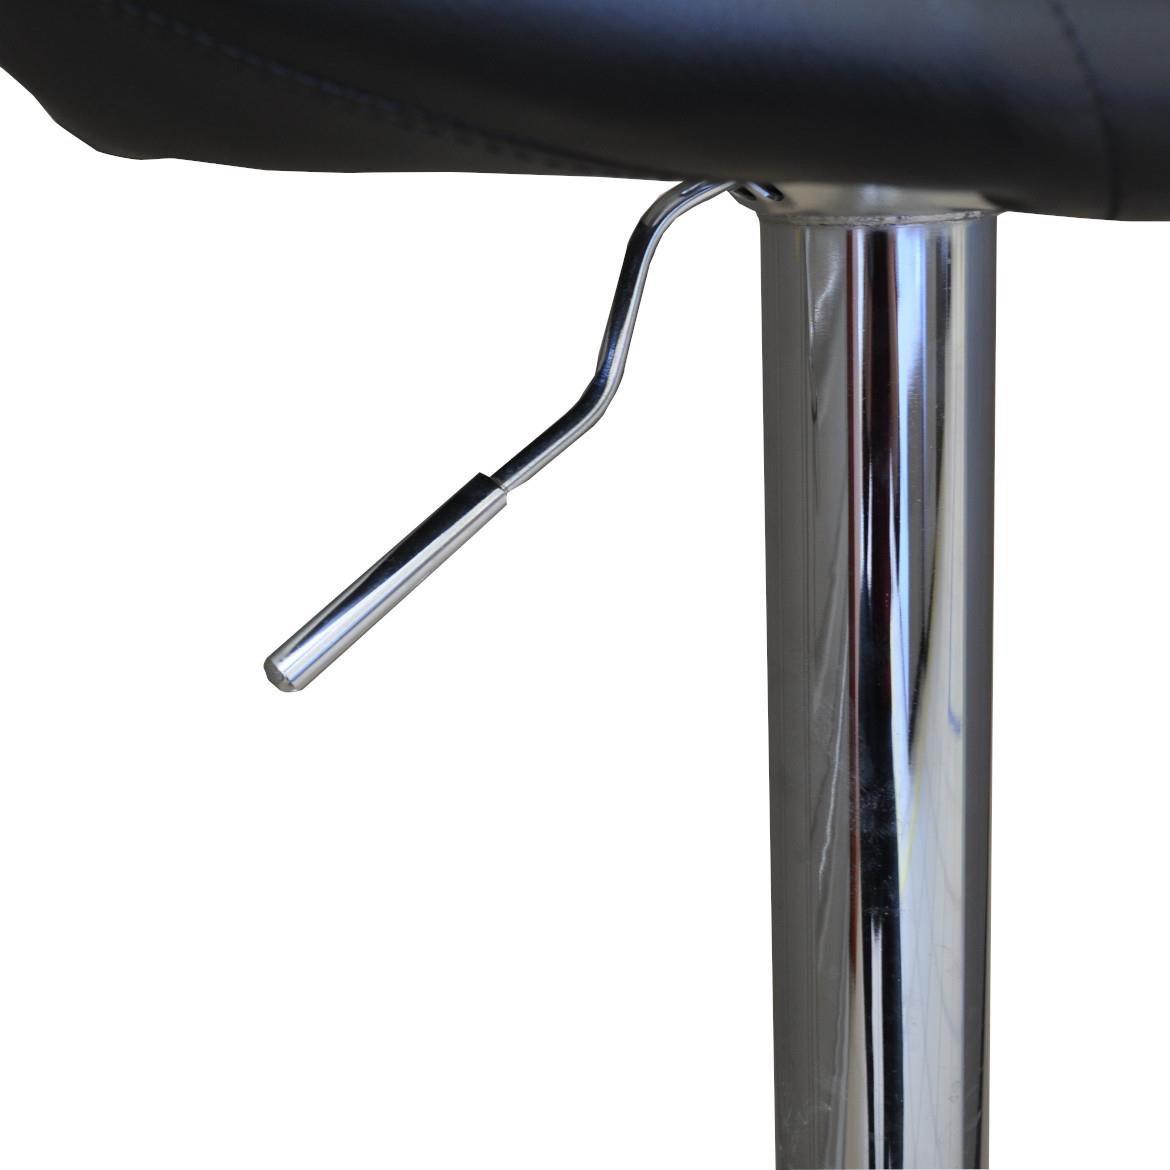 Flex 7113 barska stolica 55x55x99 cm crna